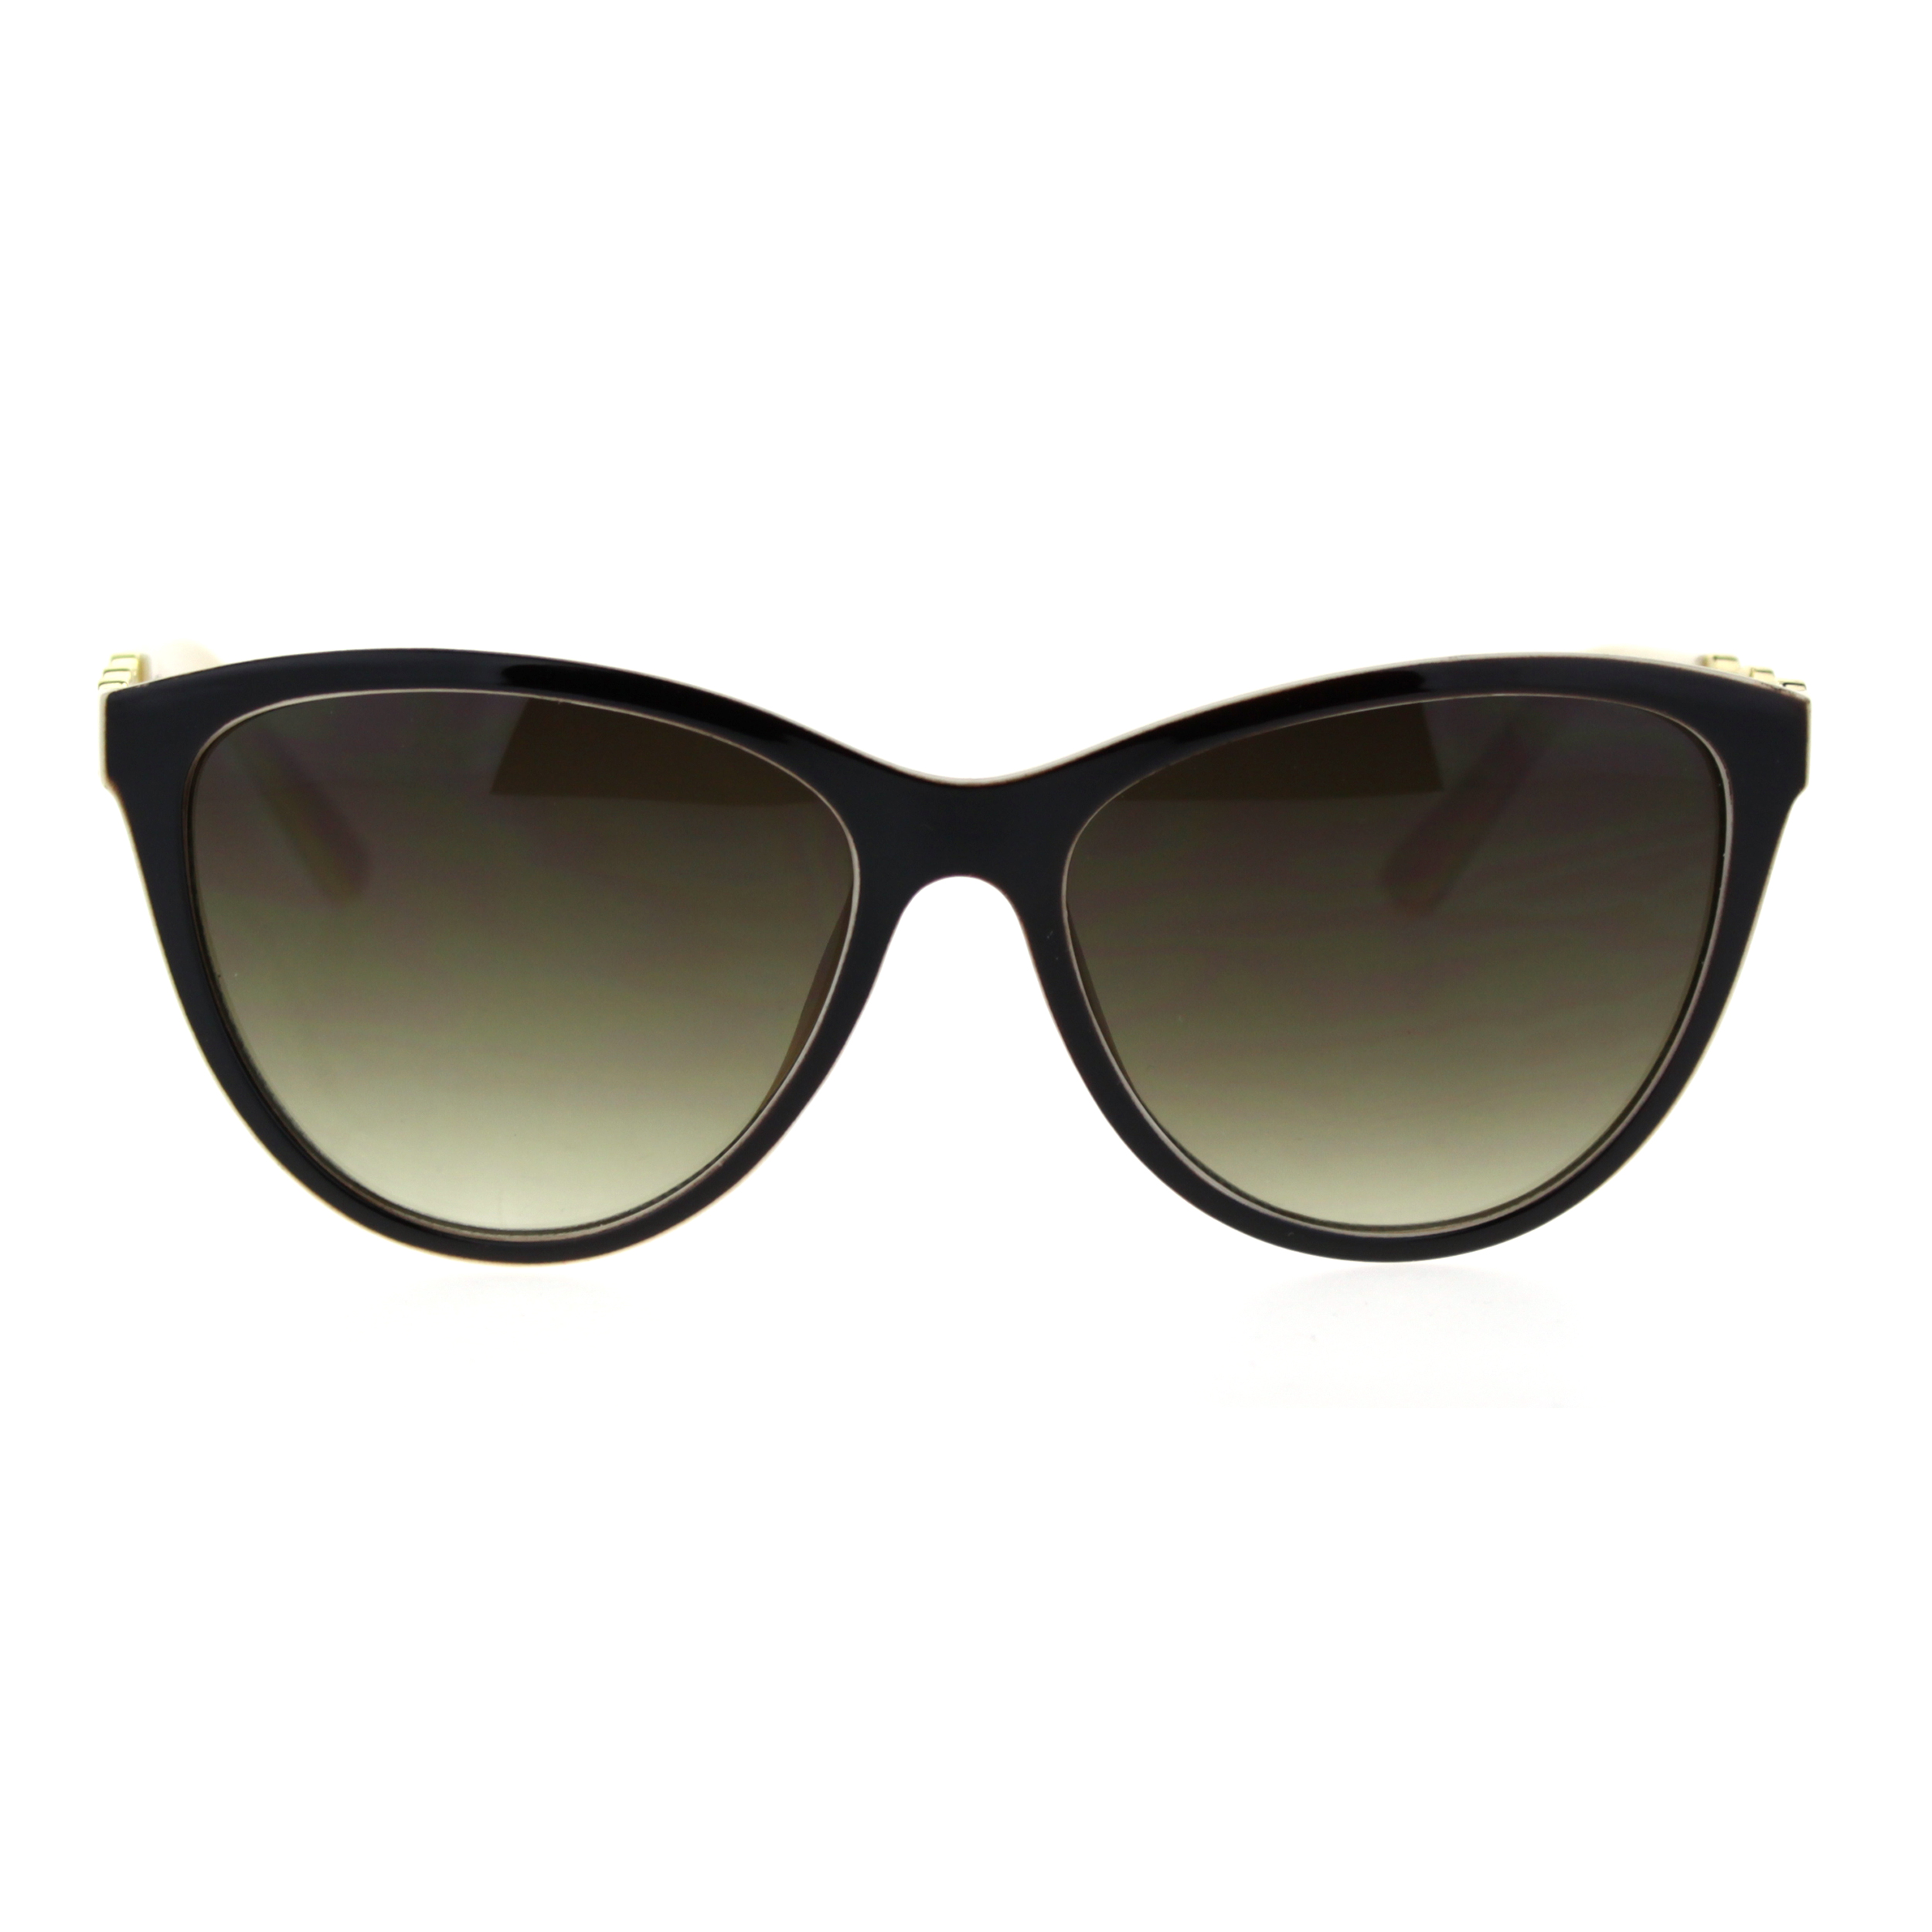 Womens Luxury Designer Fashion Cat Eye Chic Sunglasses Brown Beige Brown - image 2 of 4